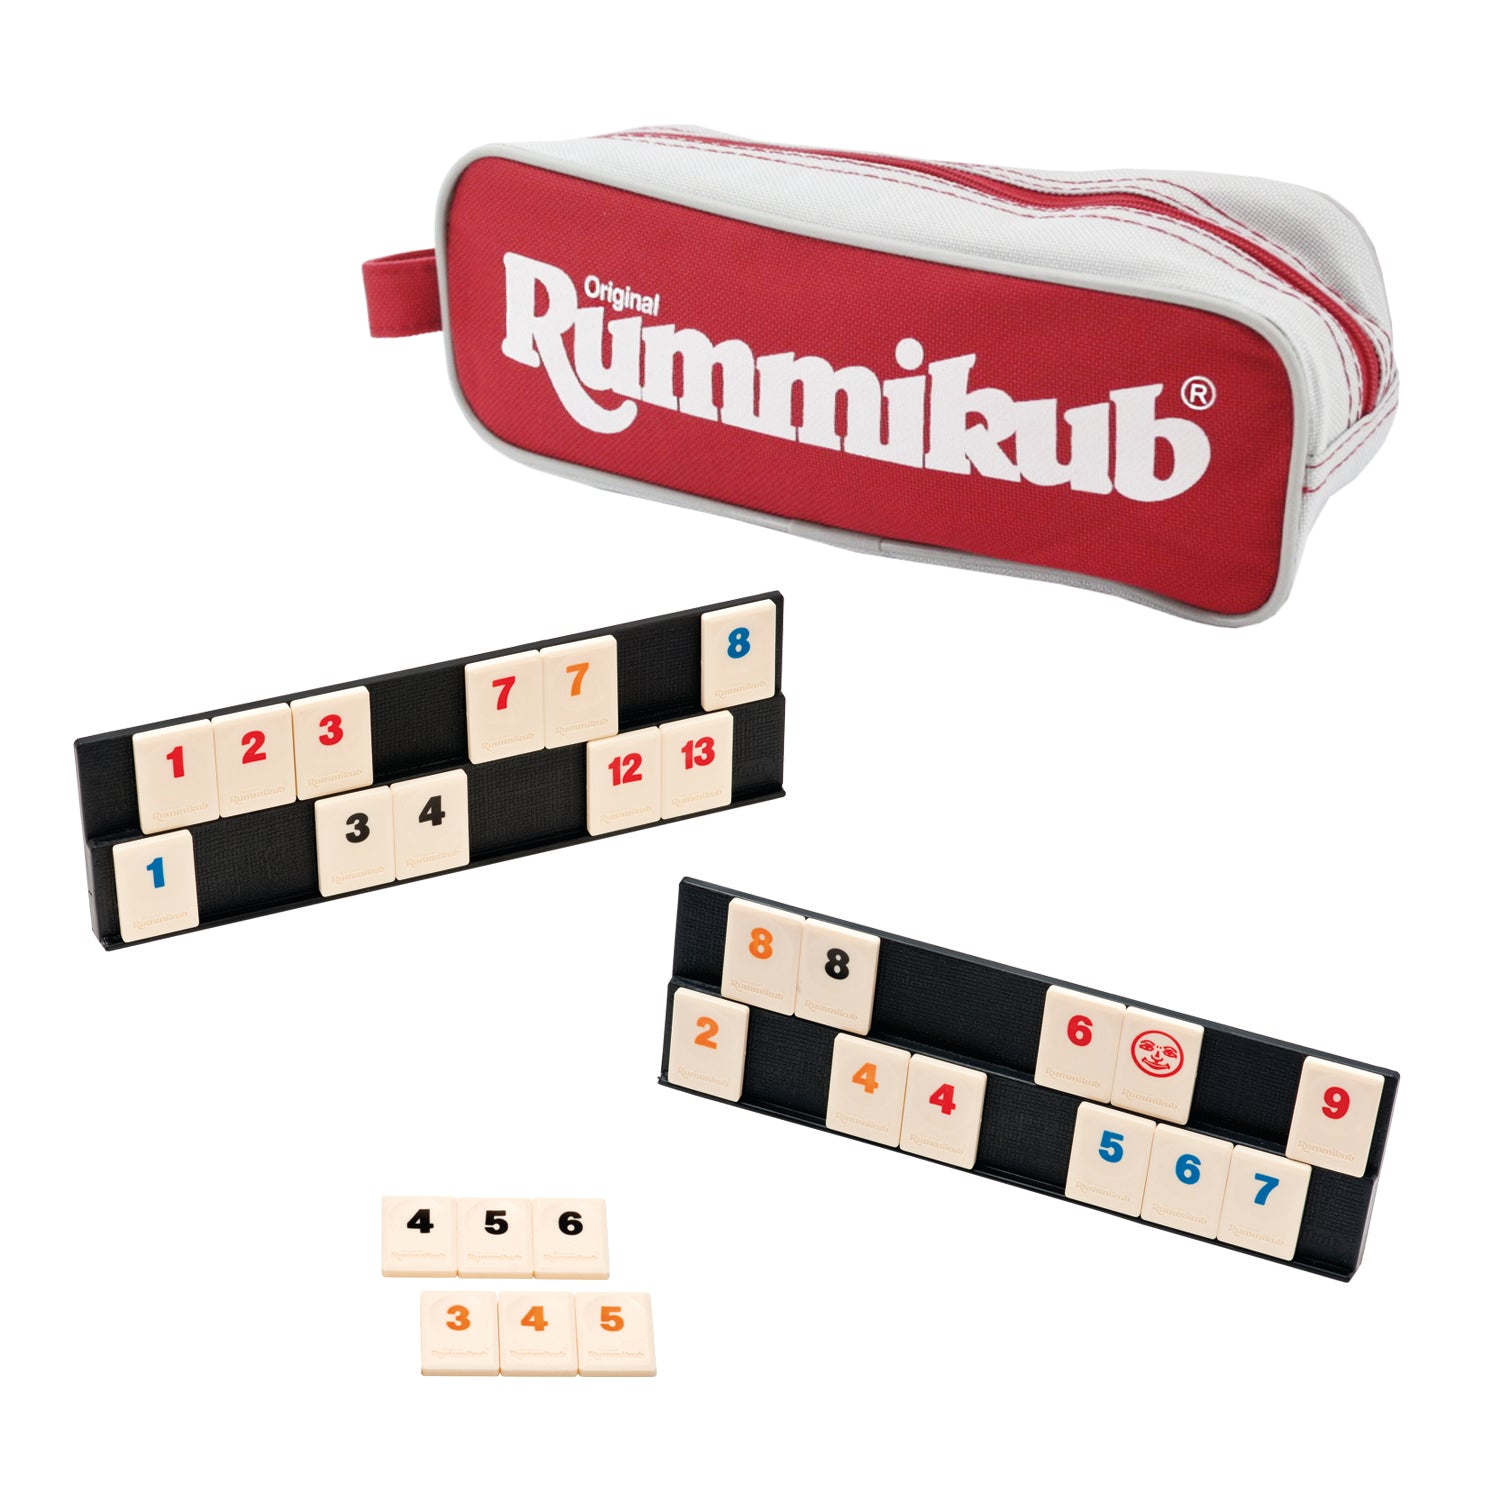 Original Rummikub Travel Pouch - product image - Jumboplay.com